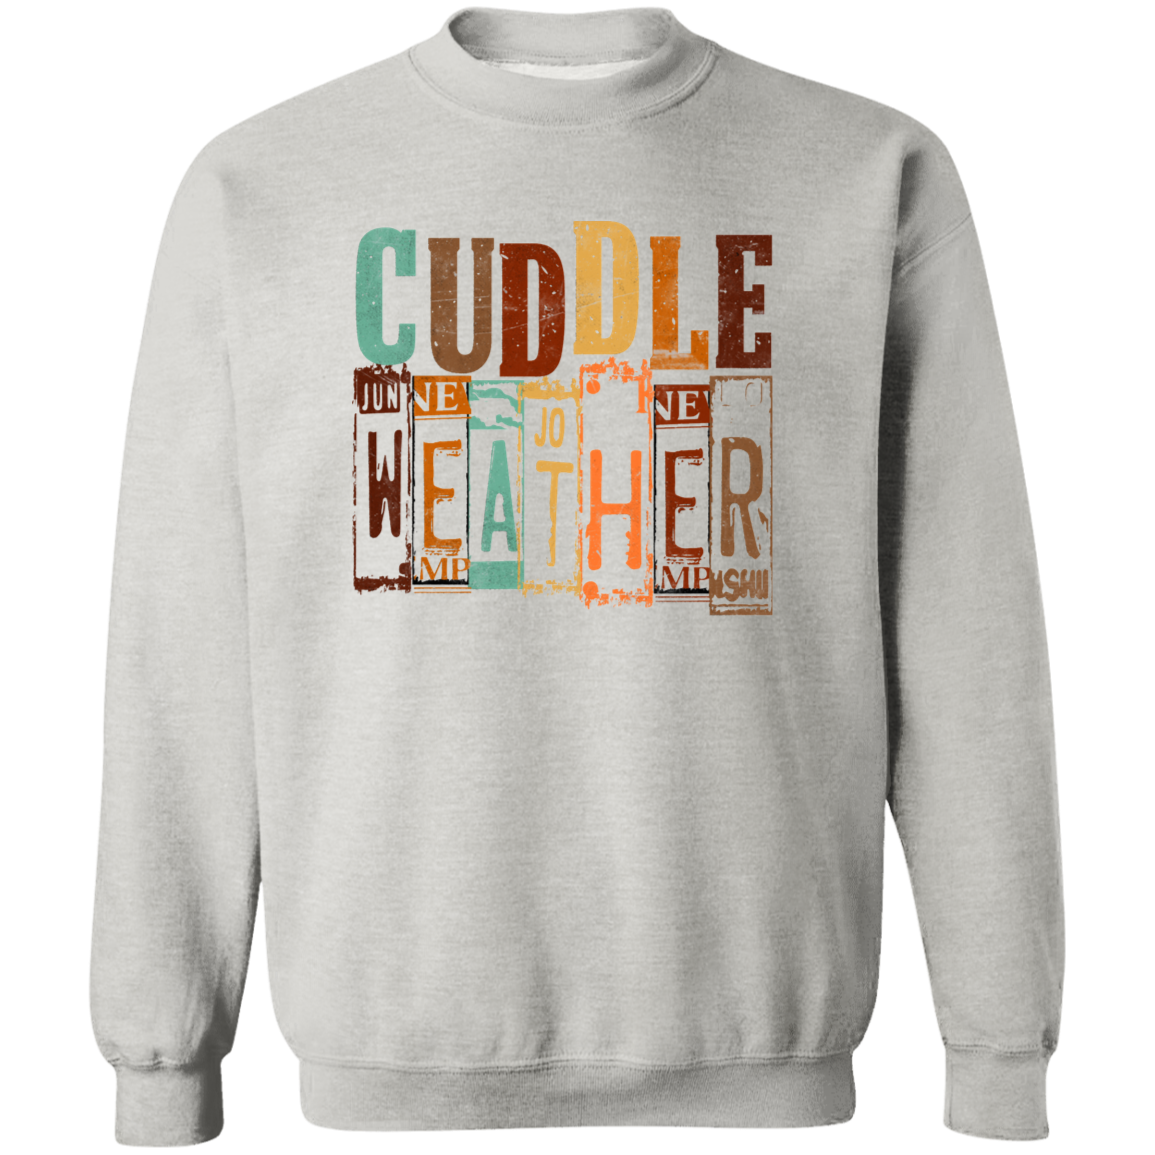 Cuddle Weather Shirt